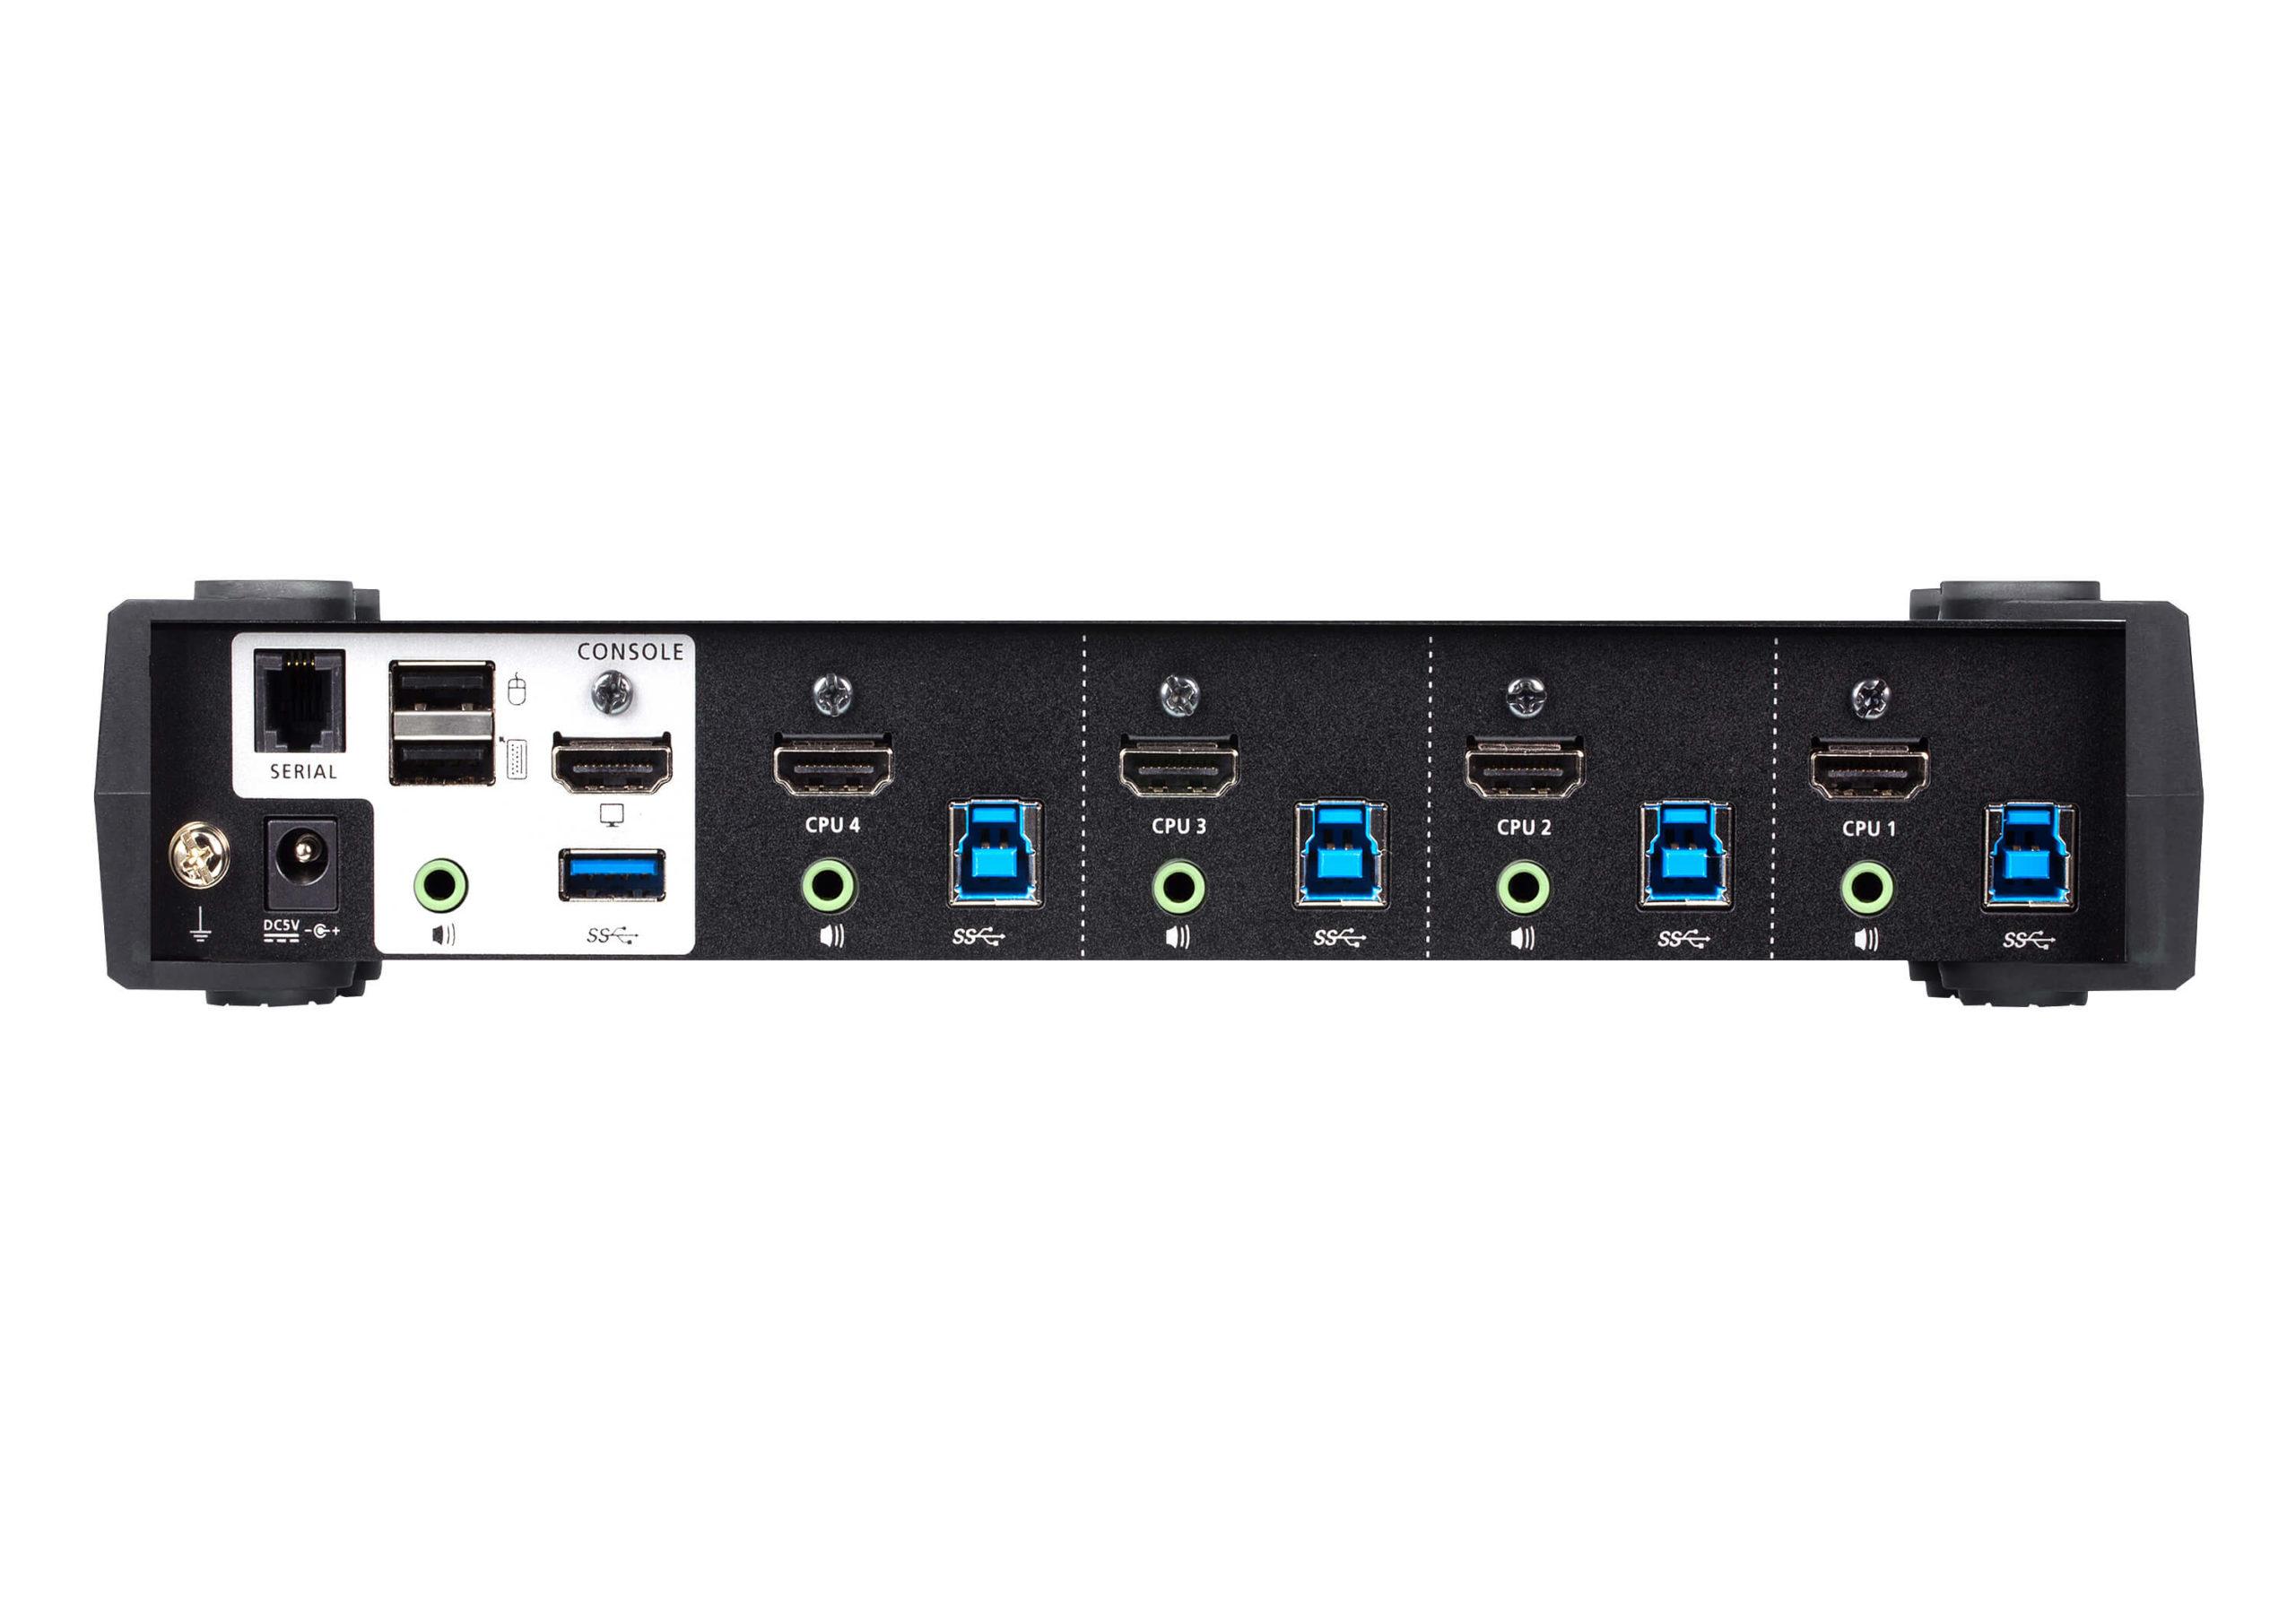 CS1824 Aten 4-Port USB 3.0 4K HDMI KVMP Switch New KVM Solutions